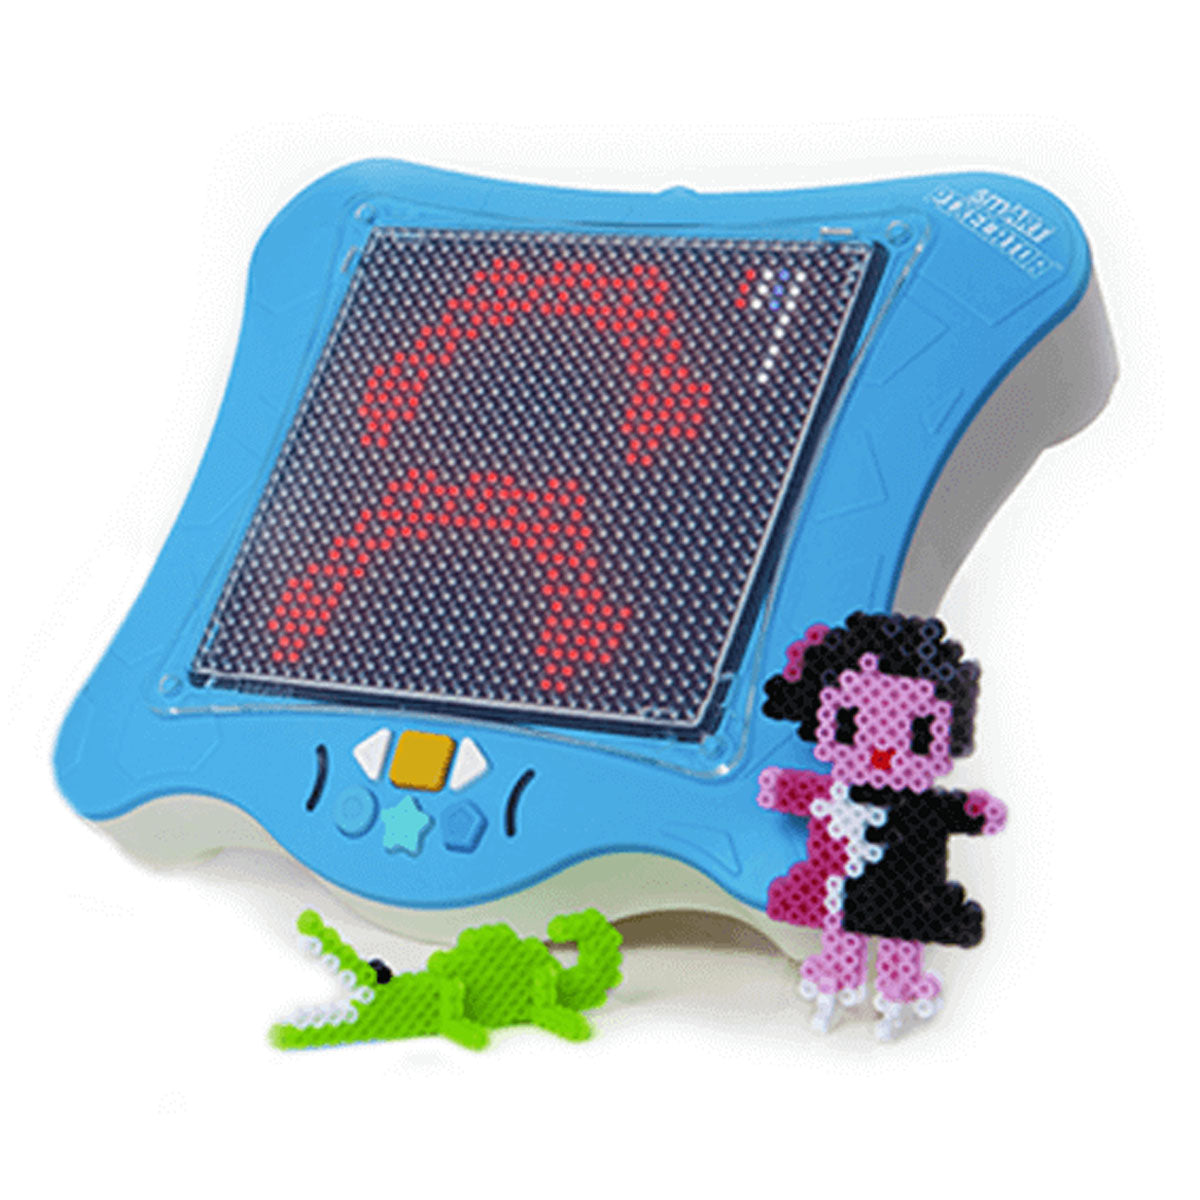 ⚡️smART Pixelator Learning Development Toy PLUS 3200 Organizer Bead Set